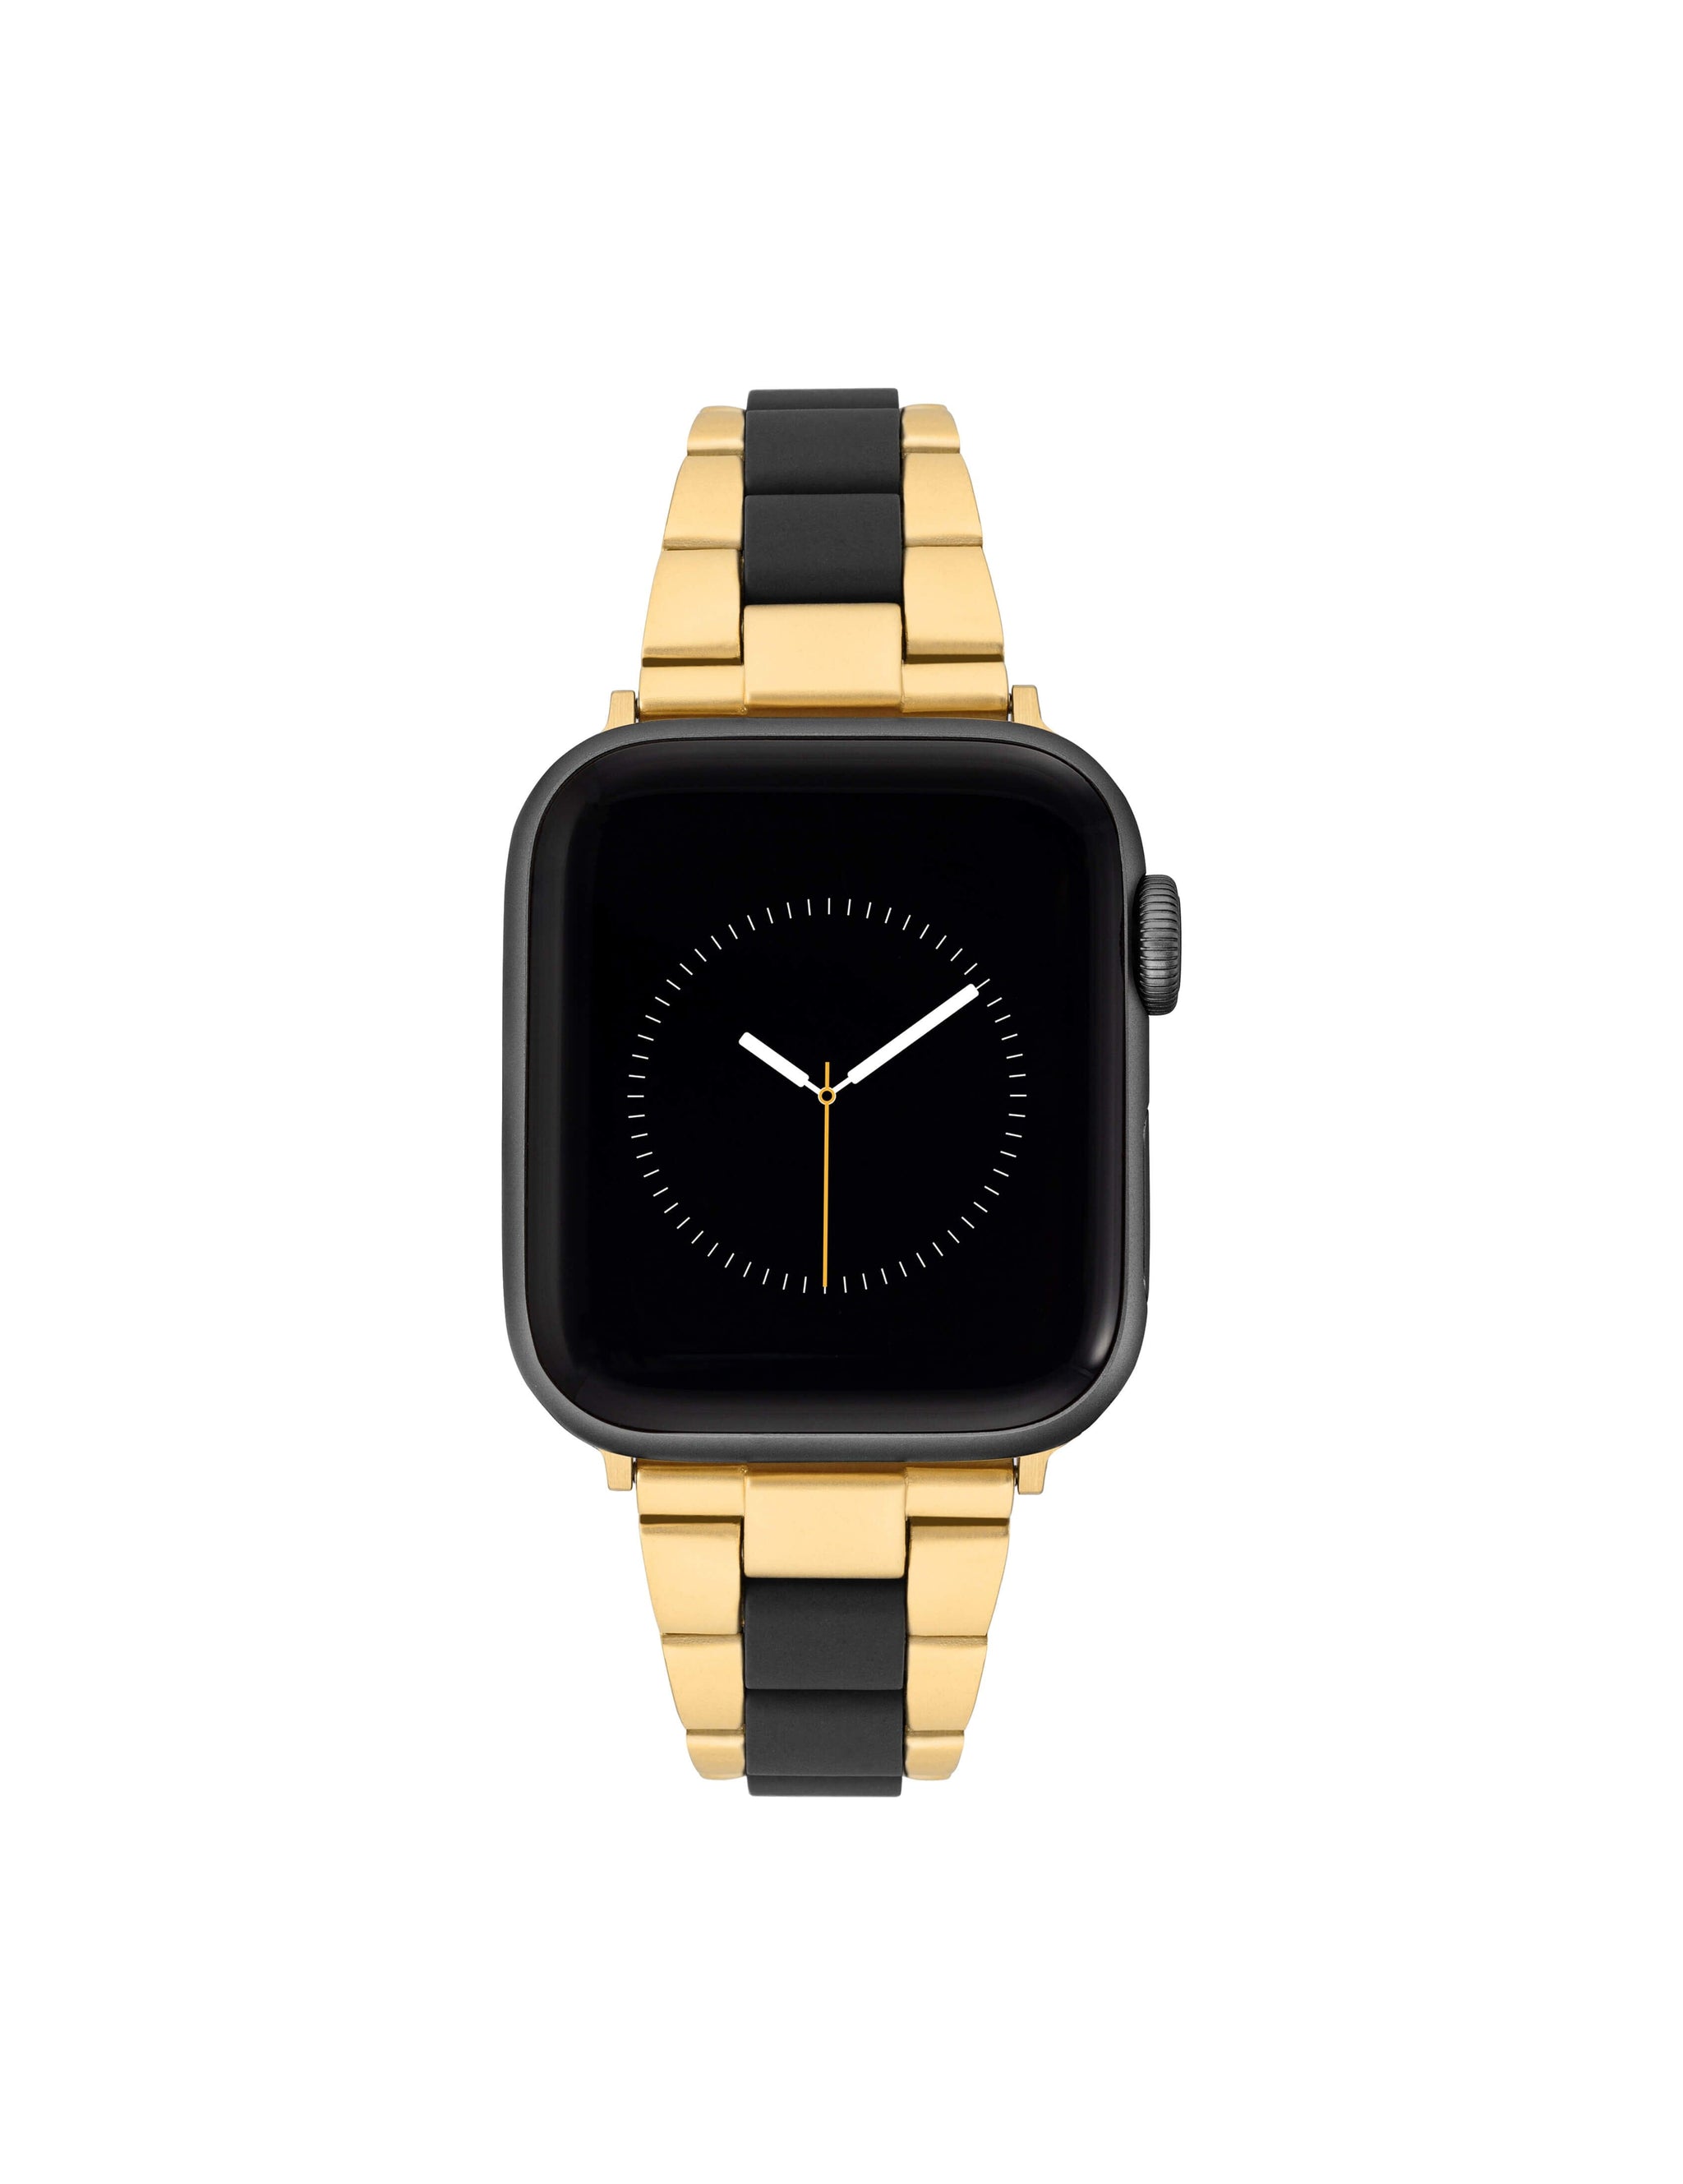 Consider It Plastic and Brushed Metal Link Bracelet for Apple Watch ...